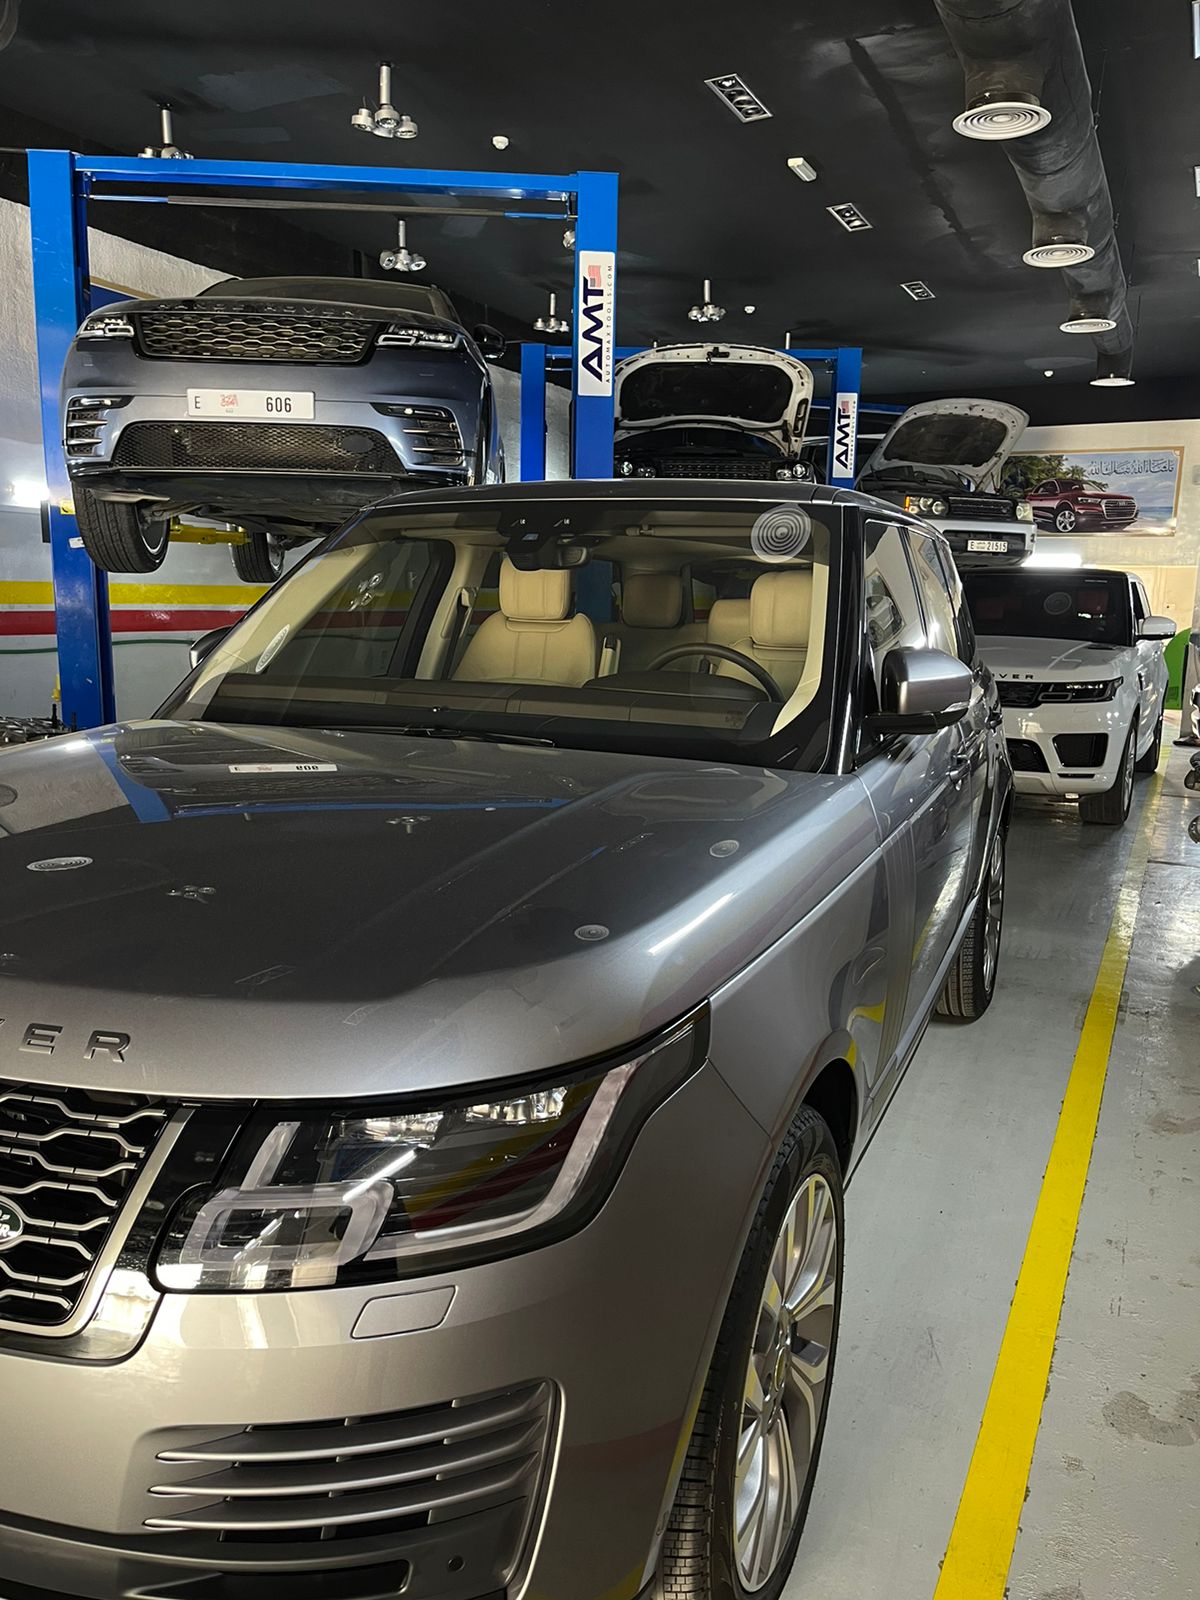 Range Rover And European Cars Service Garage In Dubai